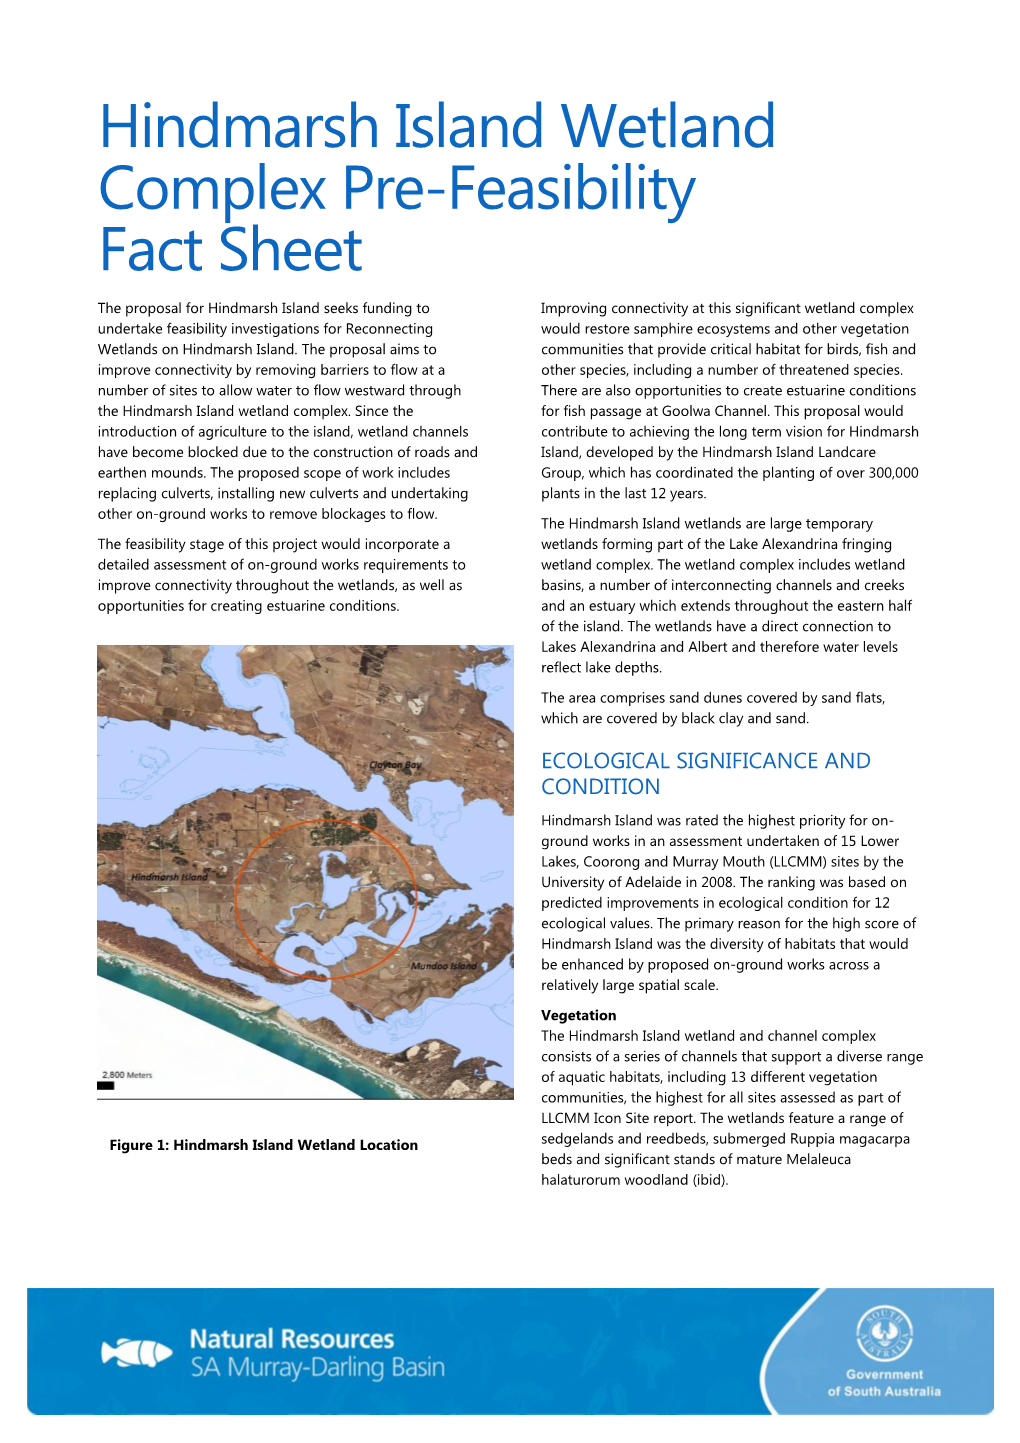 Hindmarsh Island Wetland Complex Pre-Feasibility Fact Sheet